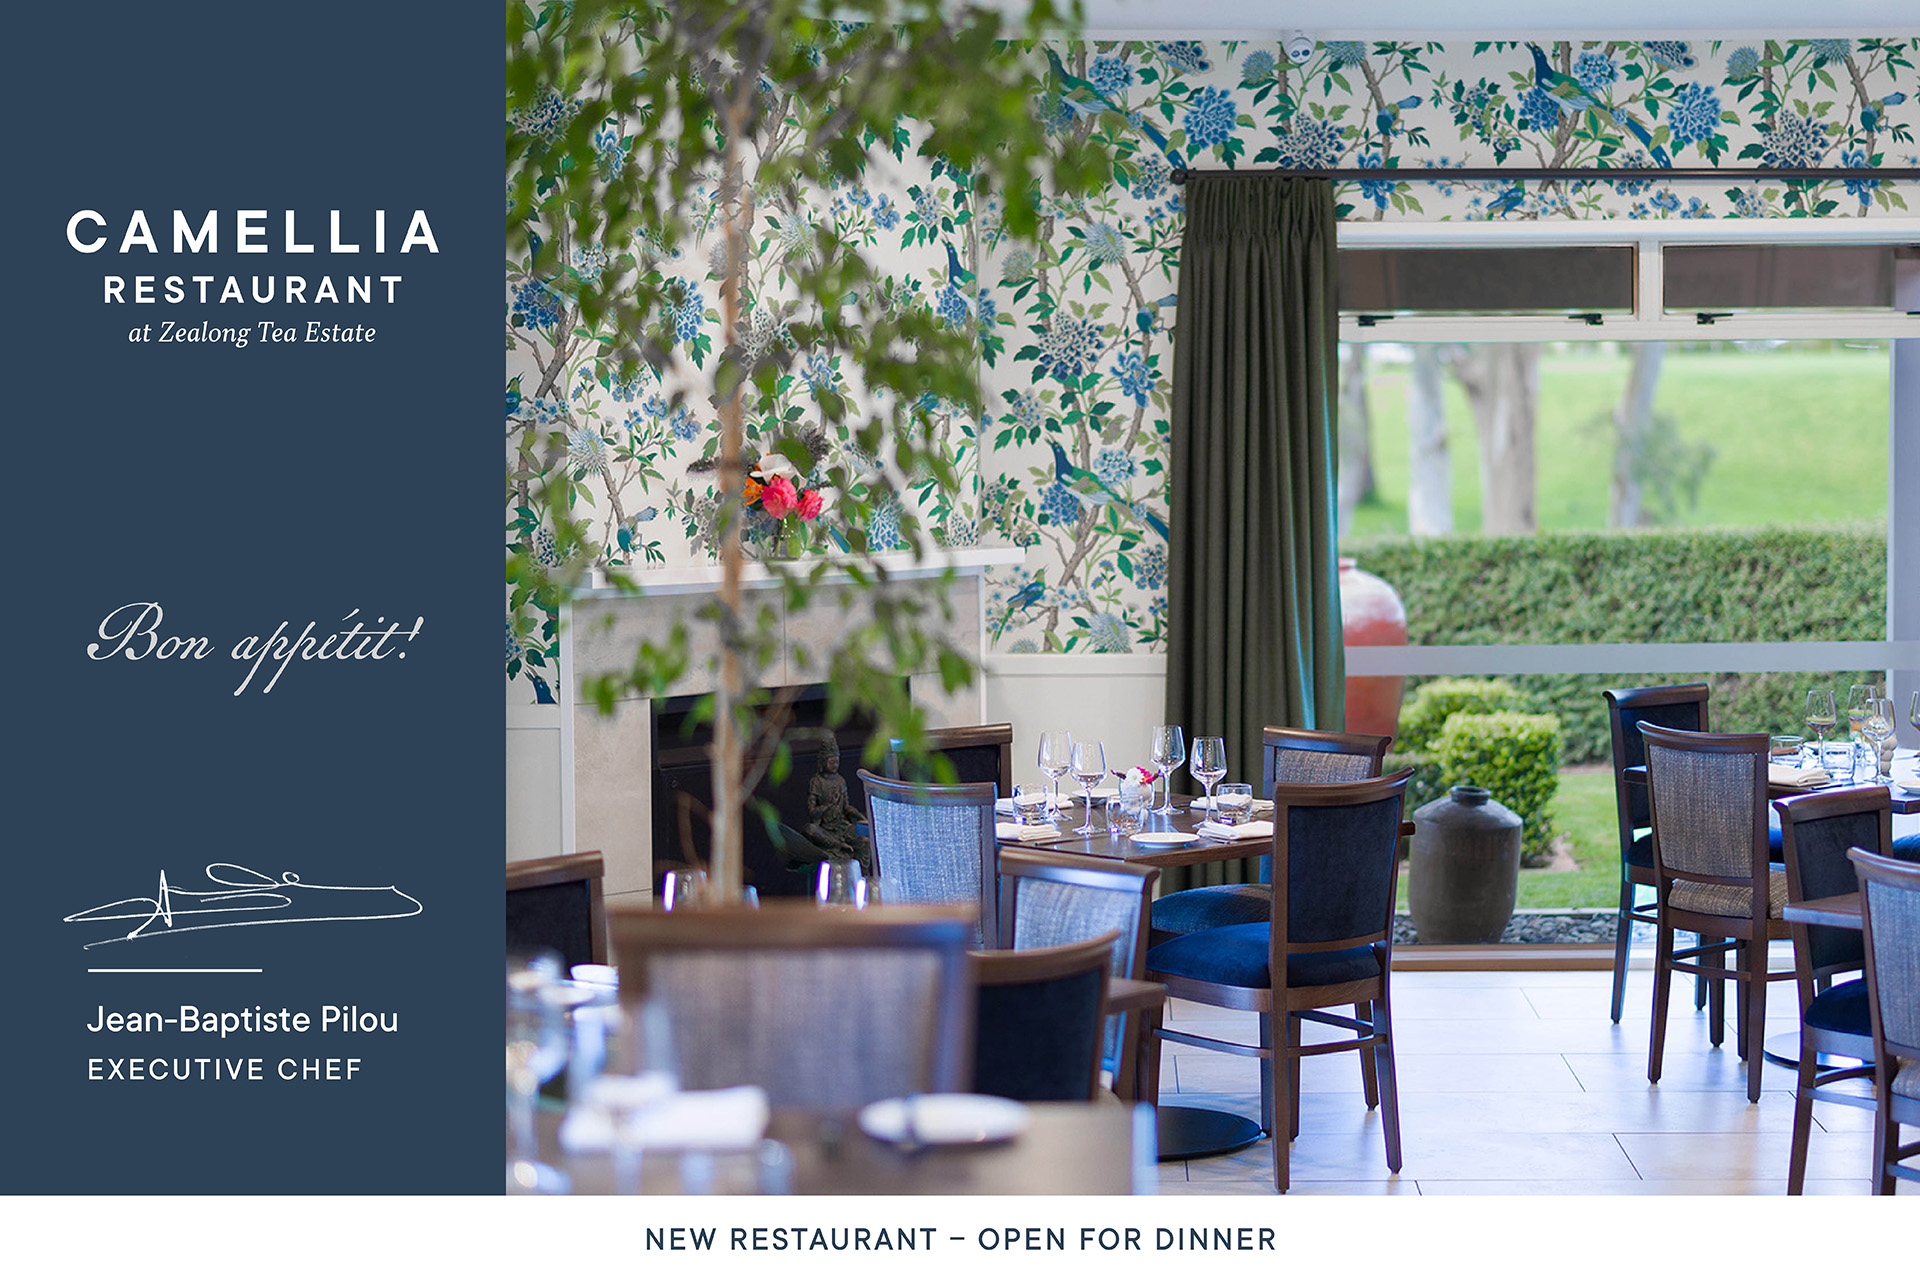 Camellia Restaurant Carousel Ad 2 - Homepage